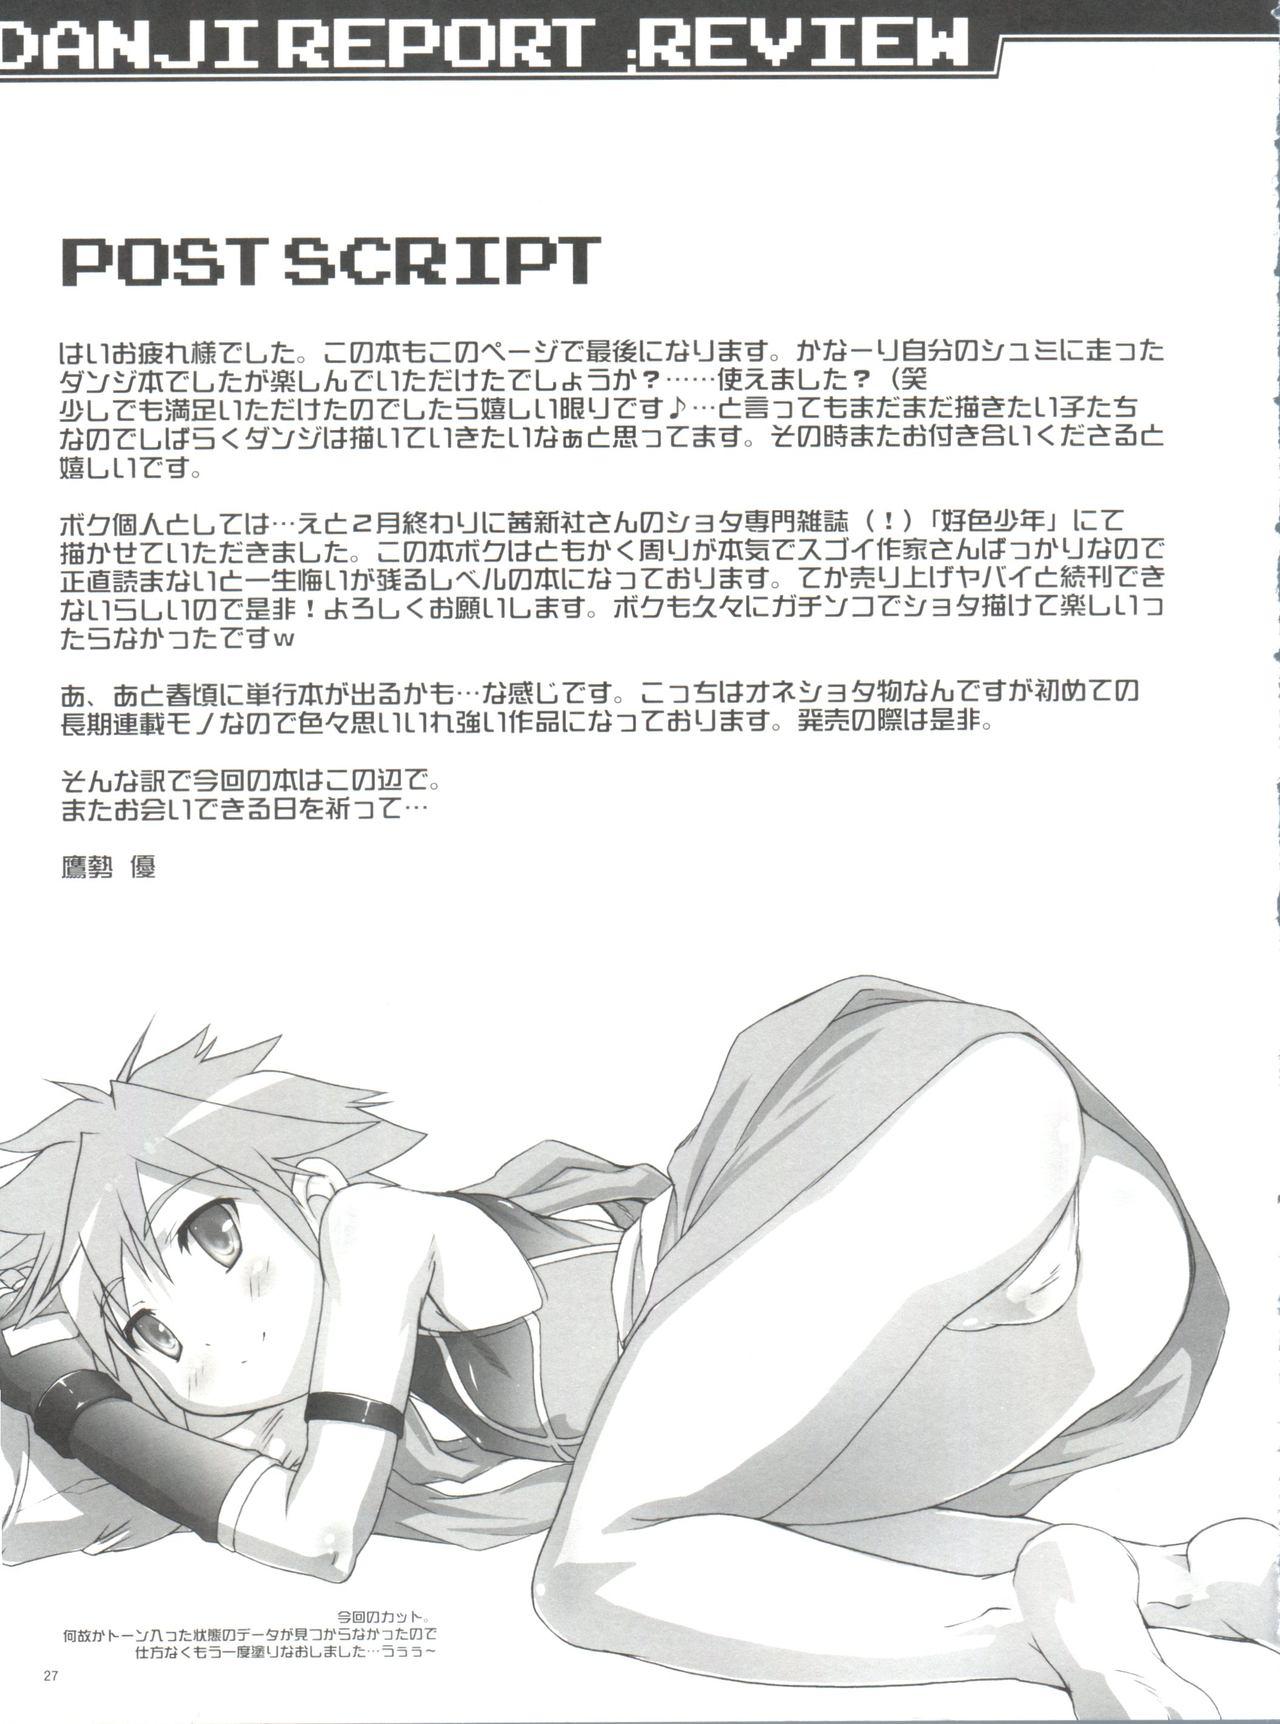 Masturbando Danji Report: REVIEW - Kyuushu sentai danjija Friend - Page 26